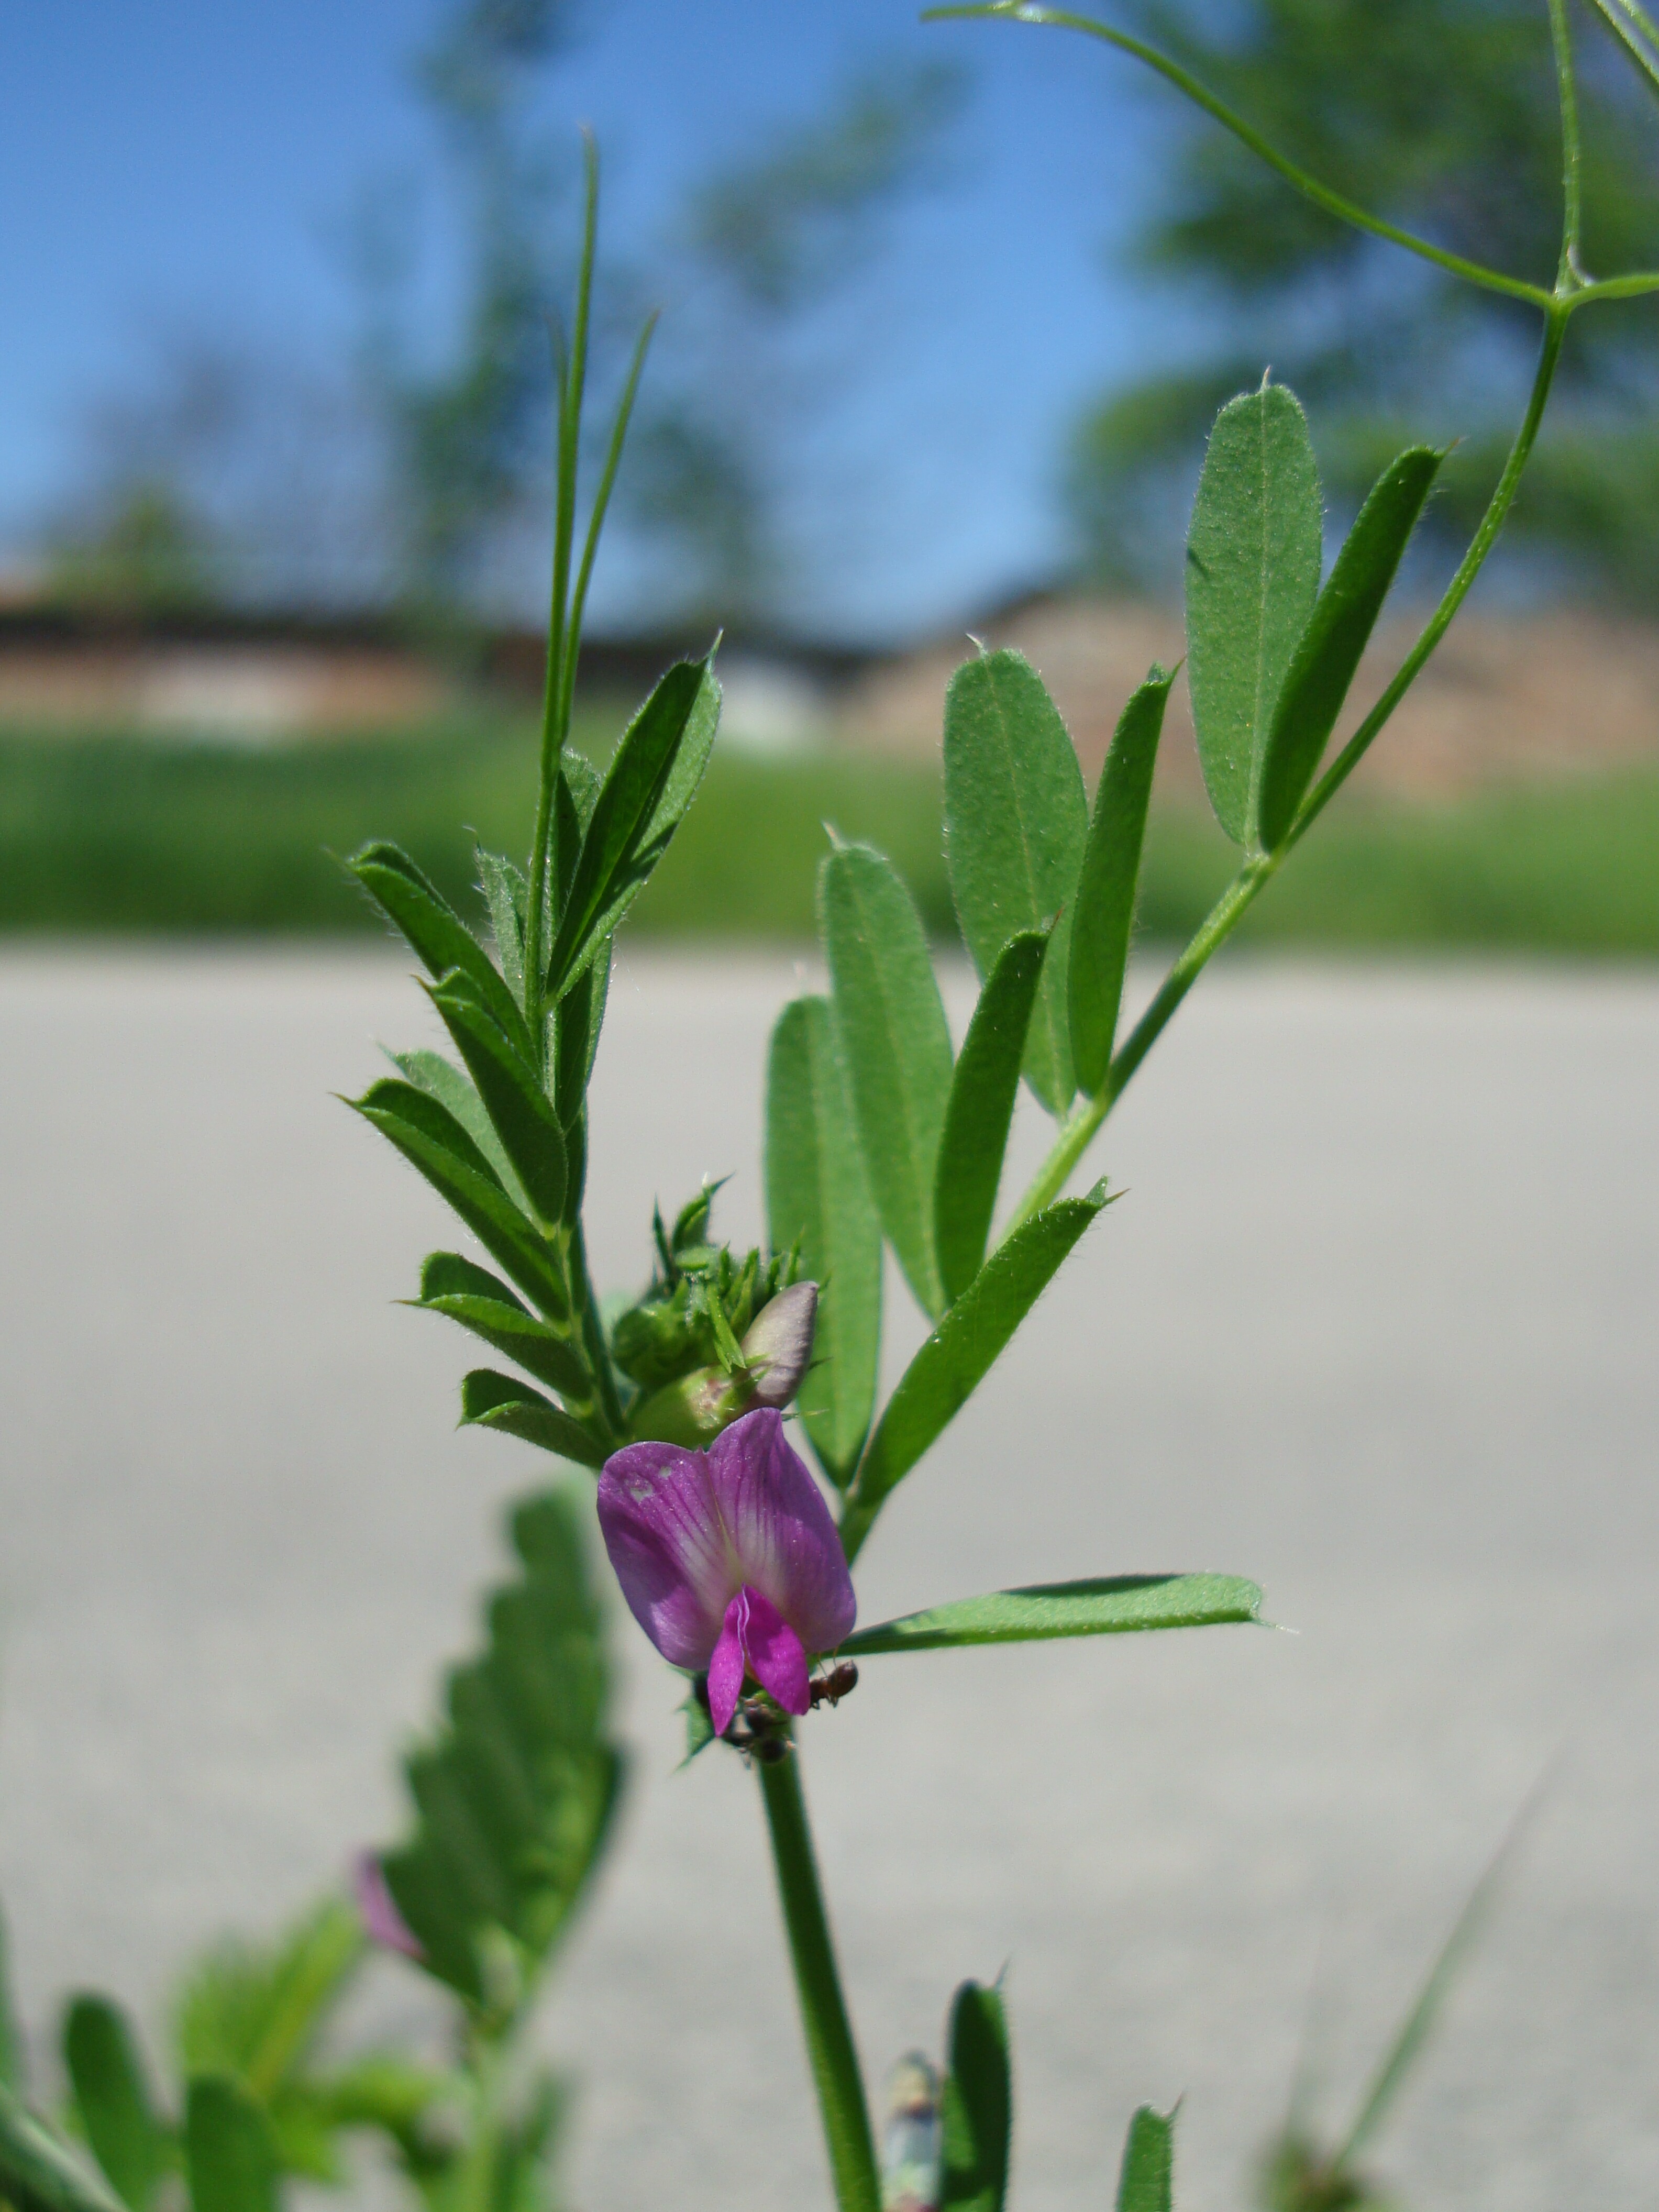 Vetési bükköny - Vicia angustifolia subsp. segetalis (Rippl-Rónai Múzeum CC BY-NC-ND)